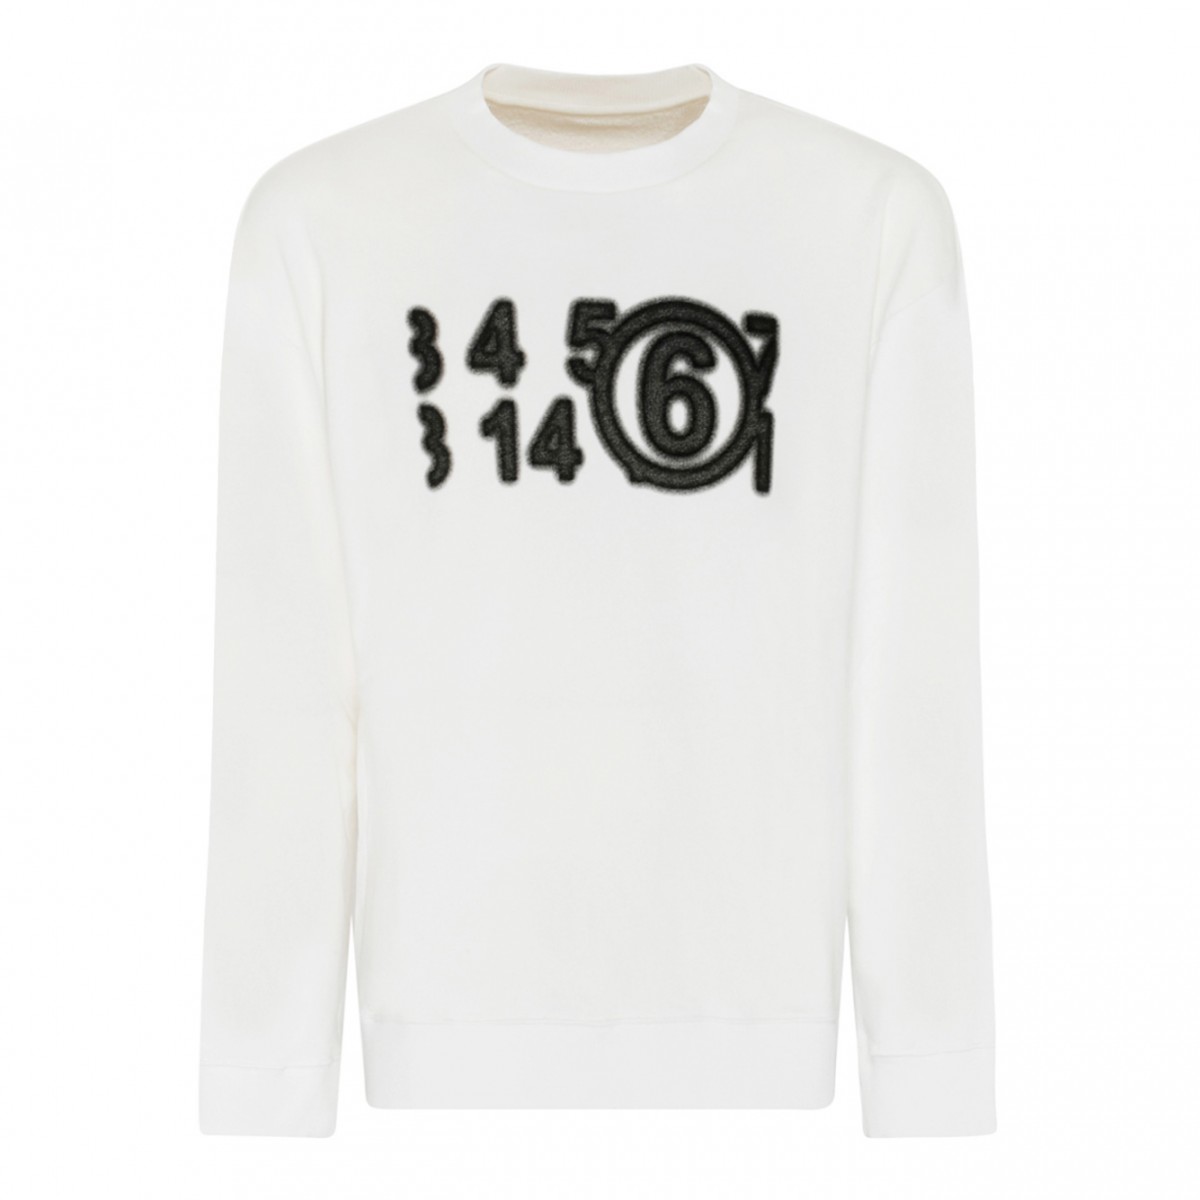 White and Black Cotton Numbers Print Sweatshirt